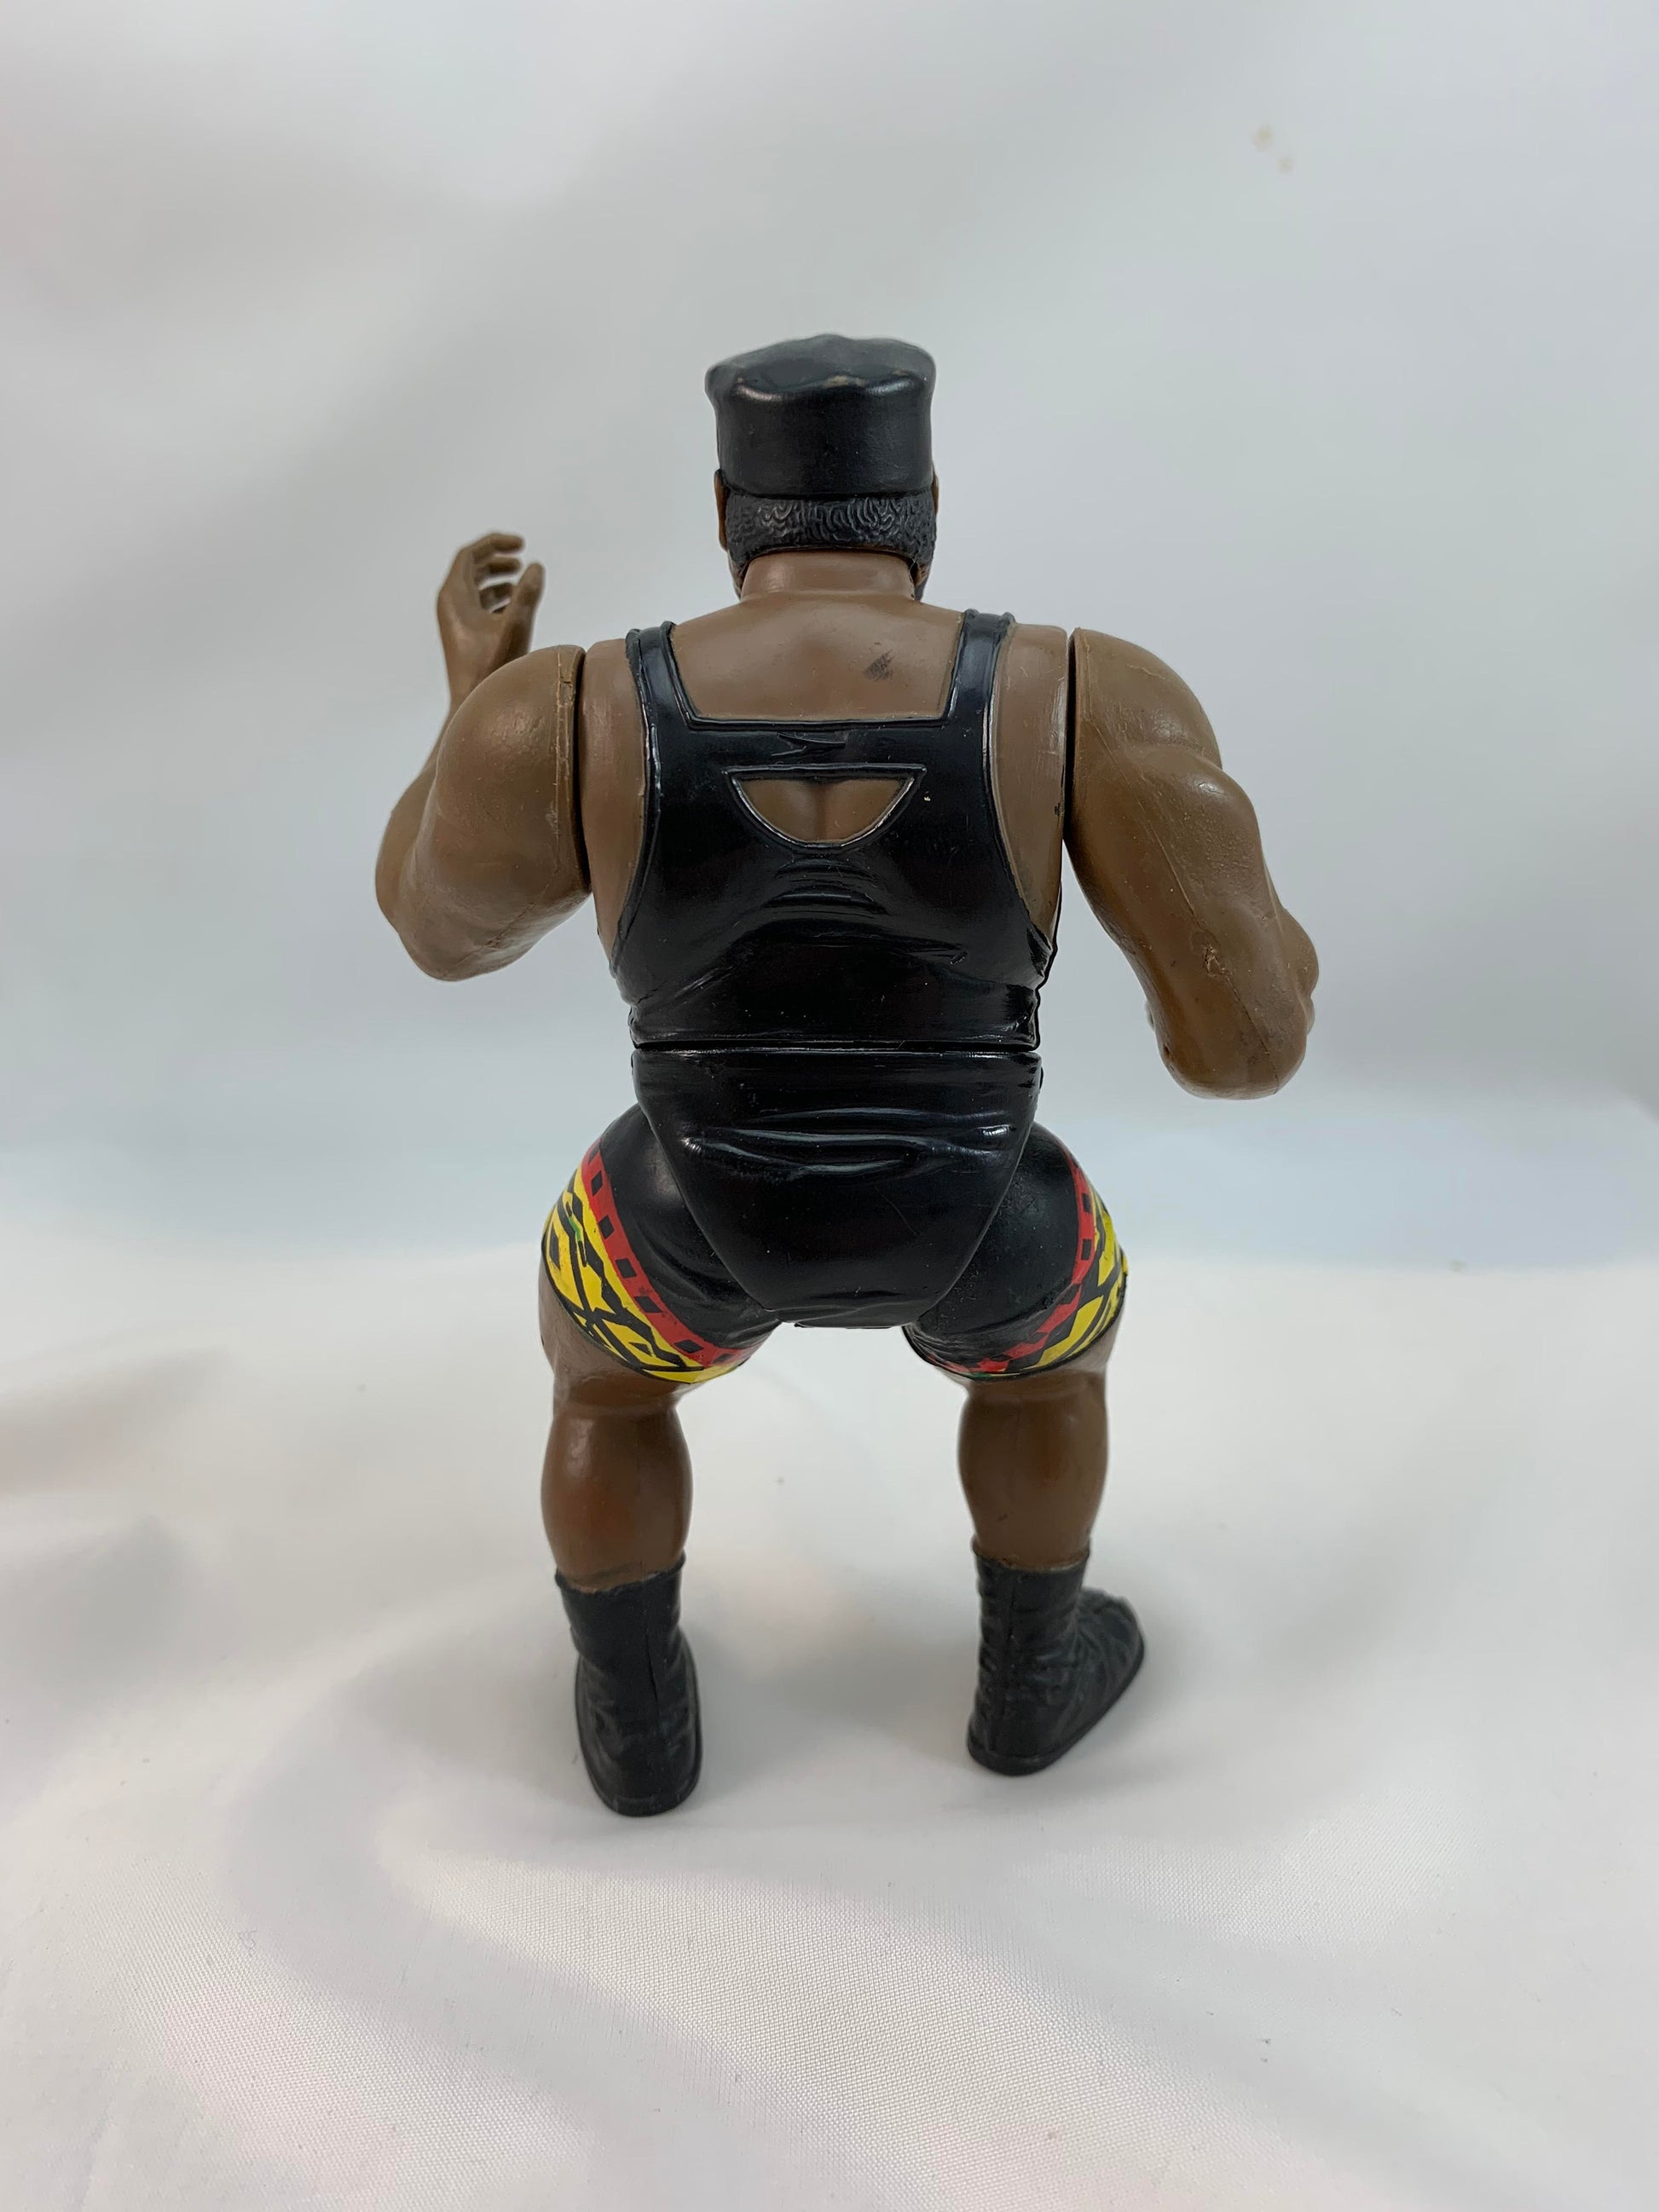 1998 Jakks PacificMark Henry WWE Wrestling Action Figure - Loose Action Figure